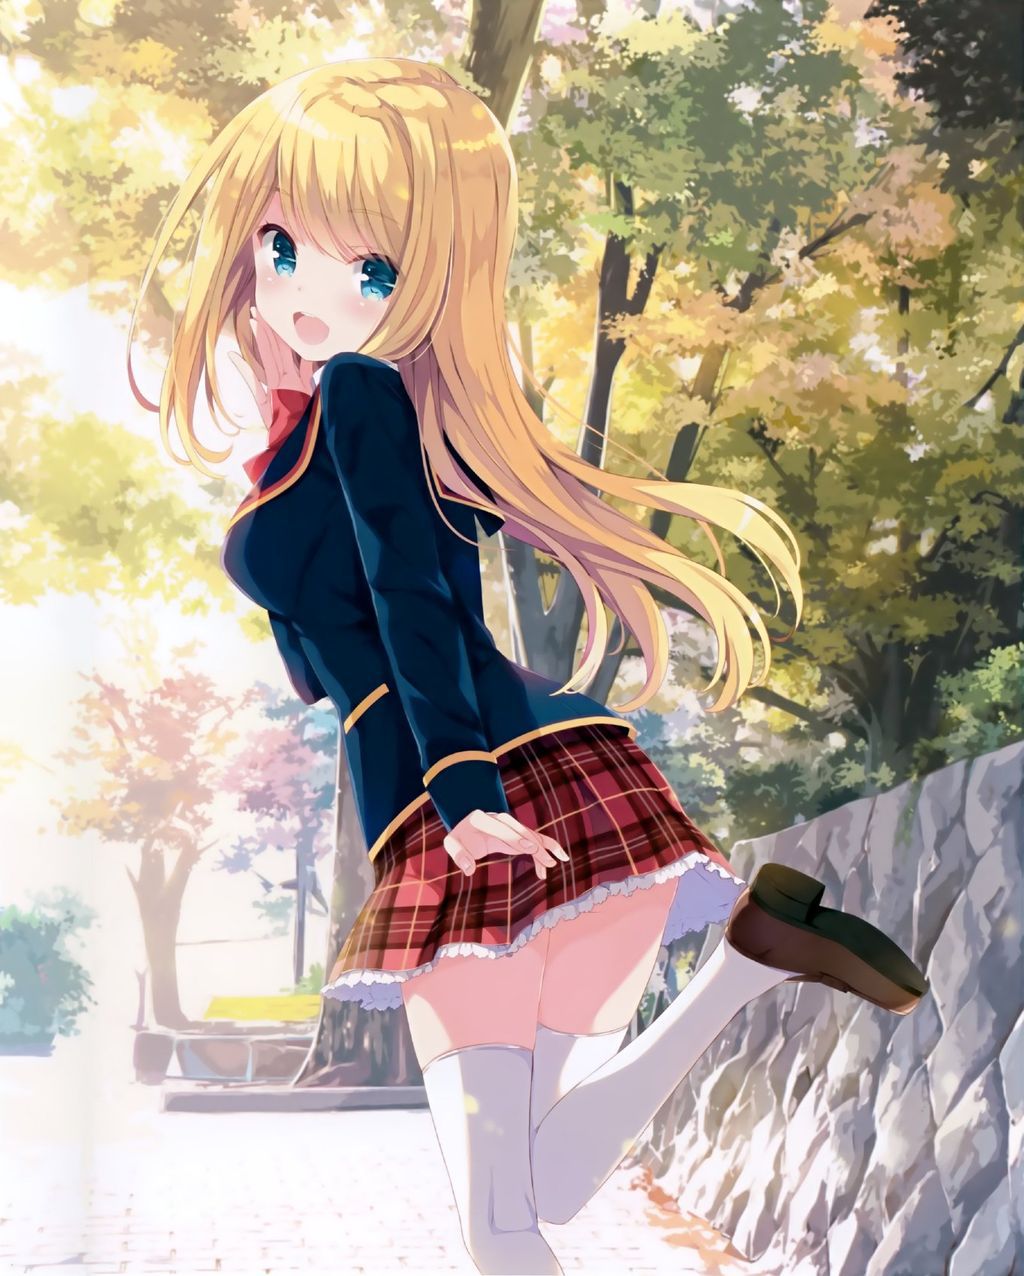 Secondary image of a cute girl in uniform part 29 [Uniform, non-erotic] 4